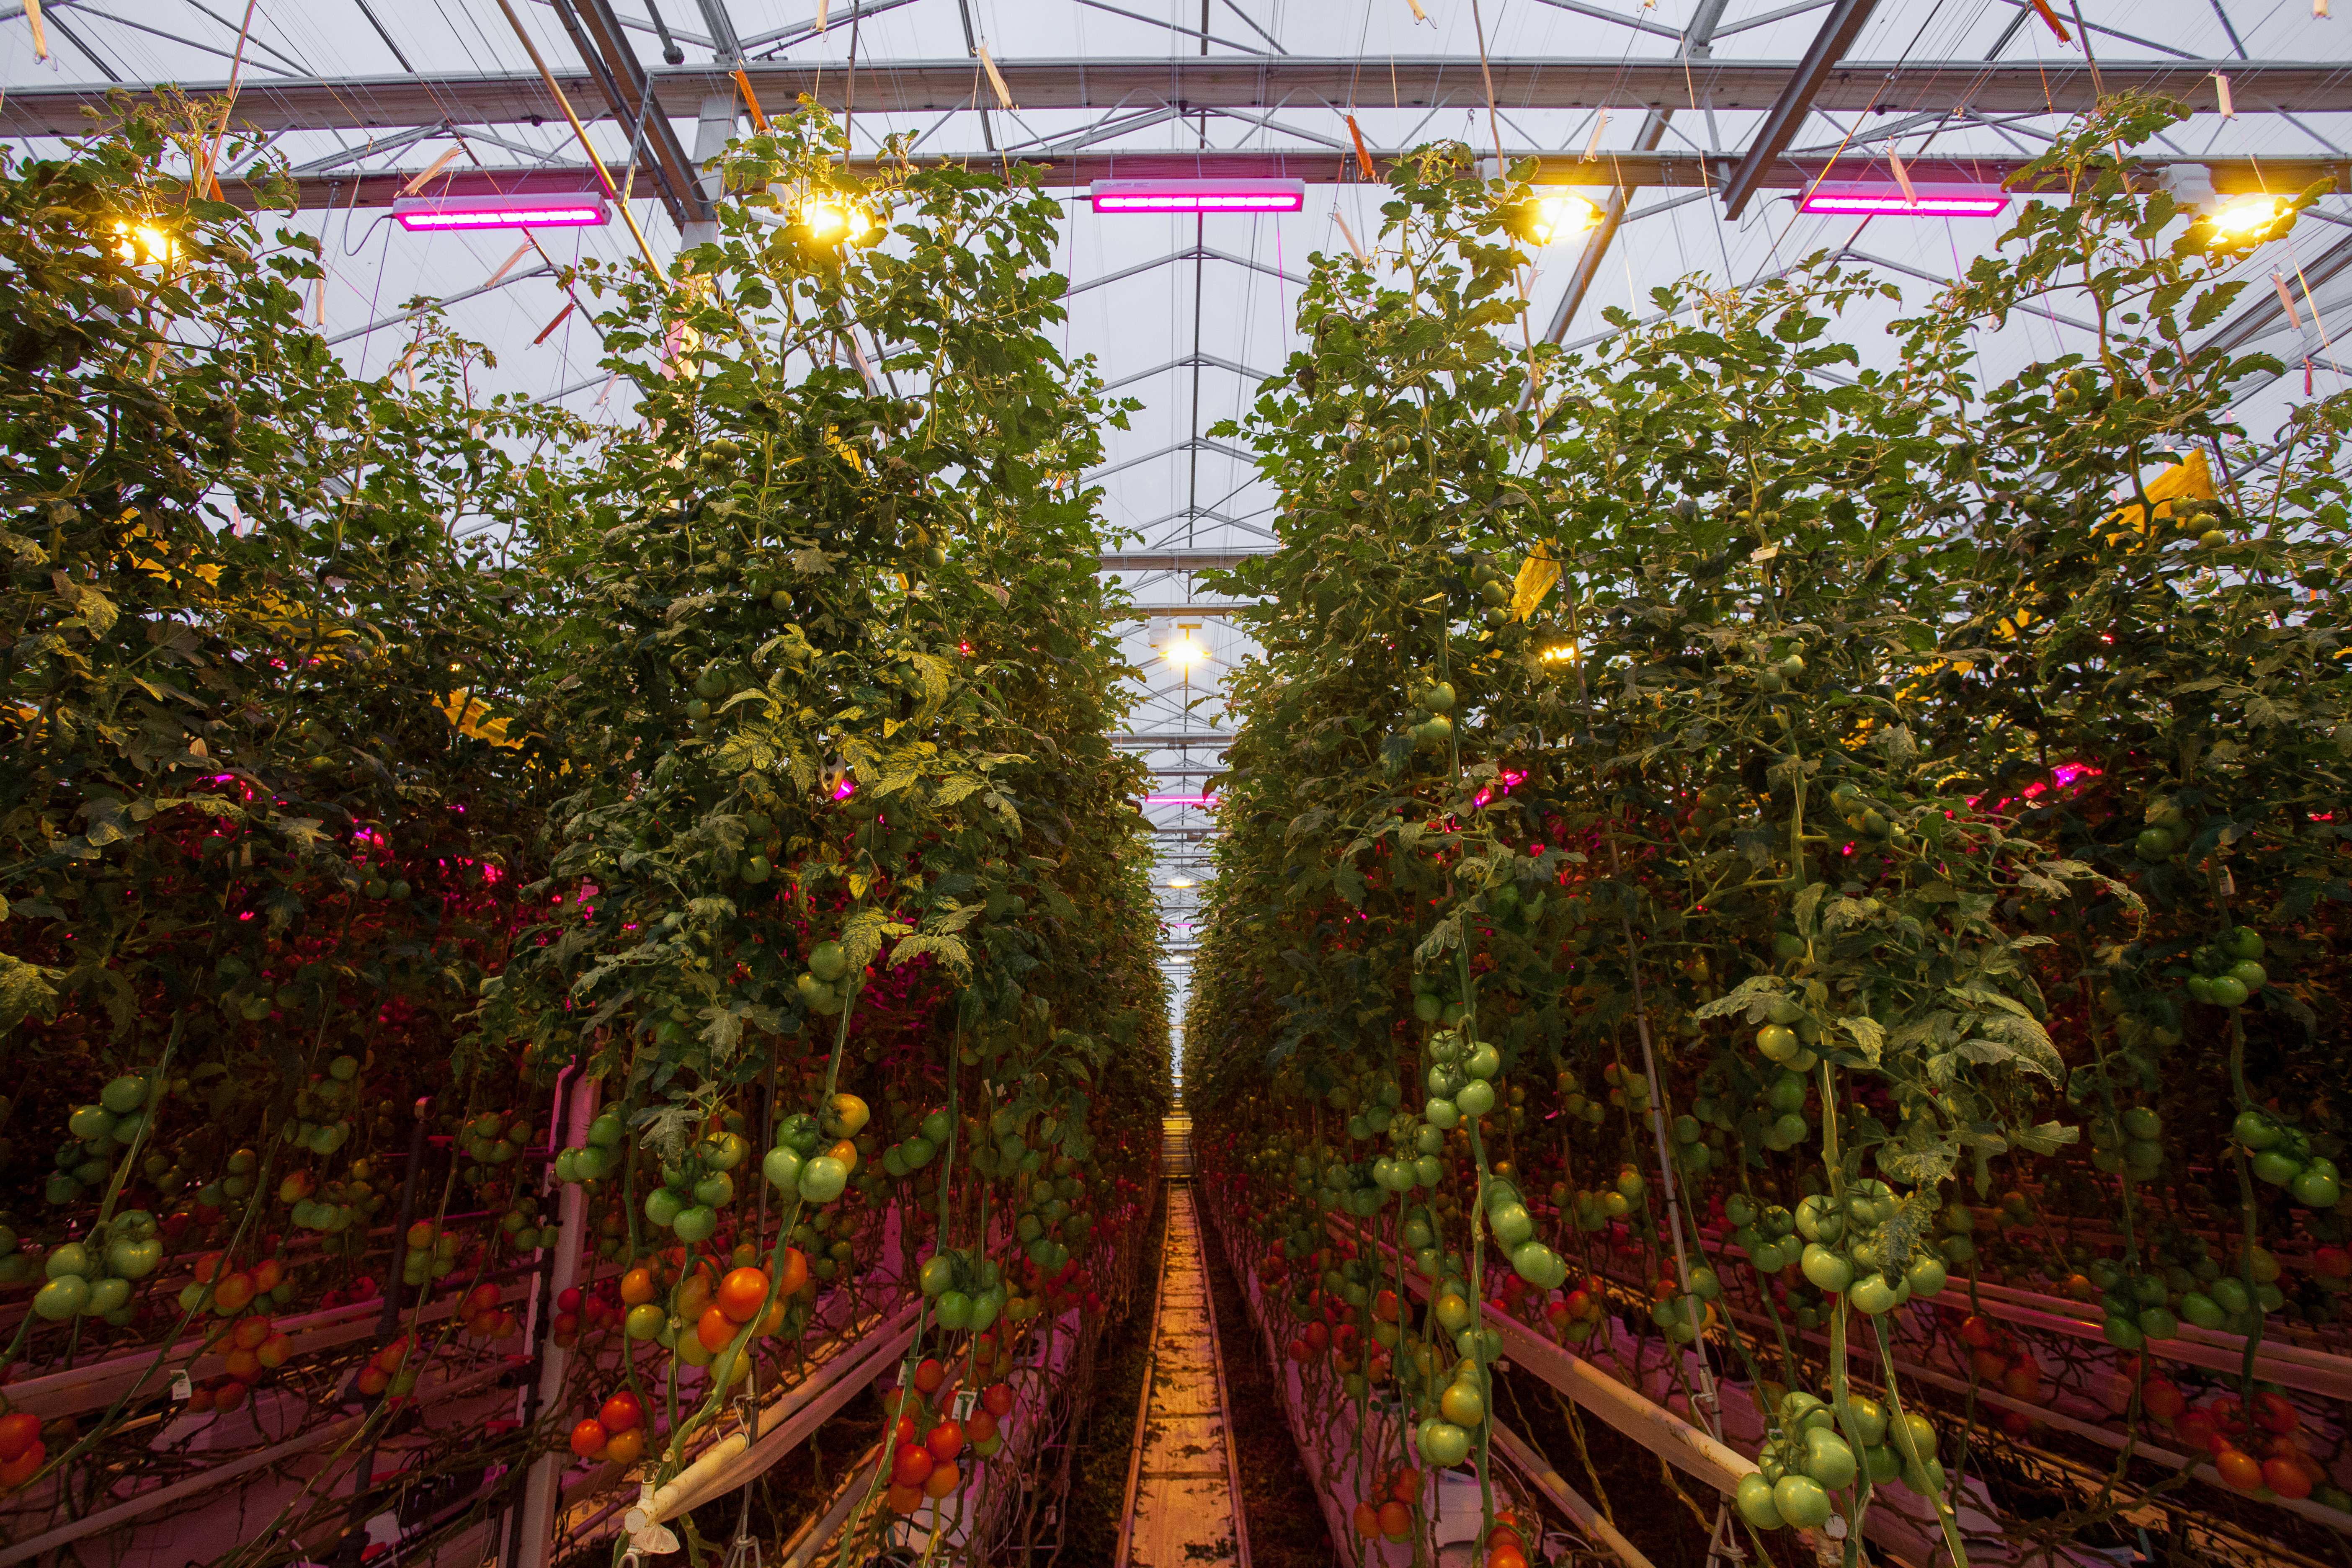 LED-HPS hybrid installation in tomato greenhouse